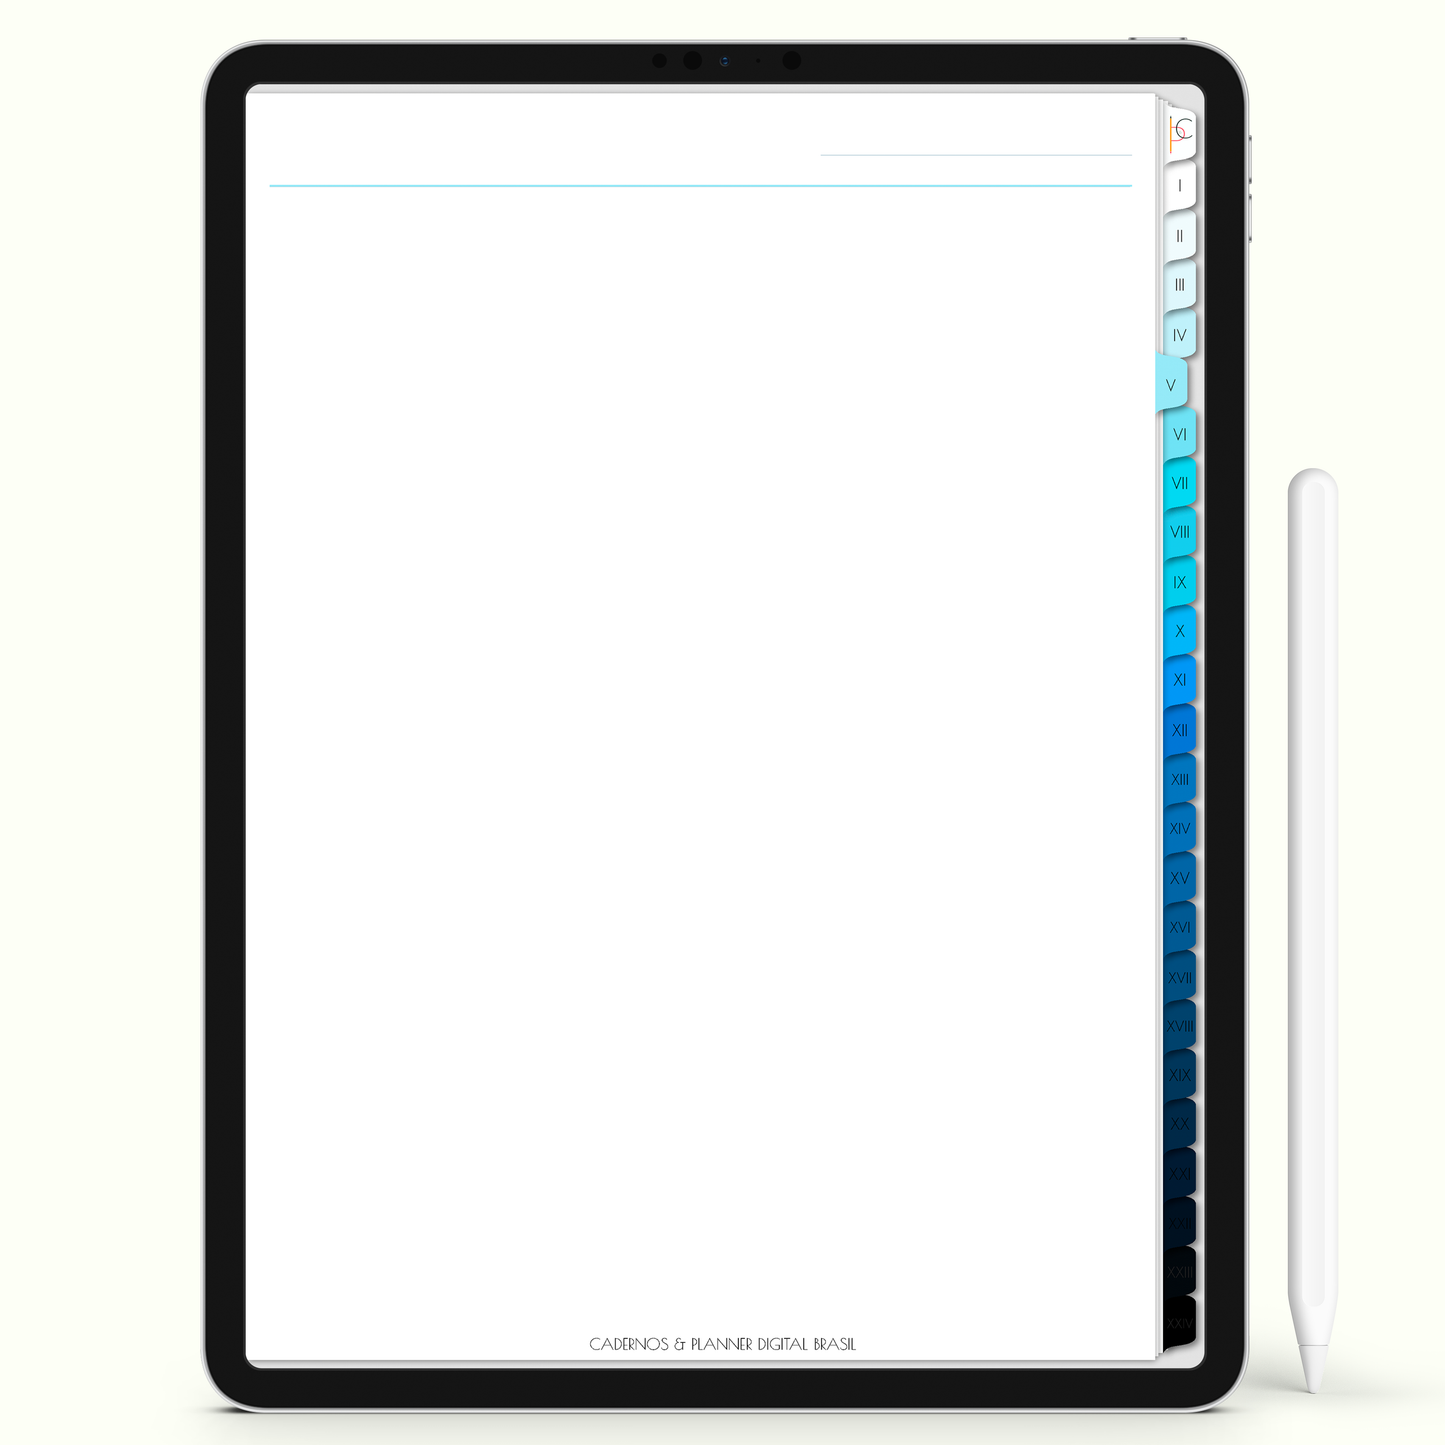 Caderno Digital 24 Matérias - Página em branco para iPad e Tablet Android. Cadernos & Planner Digital Brasil